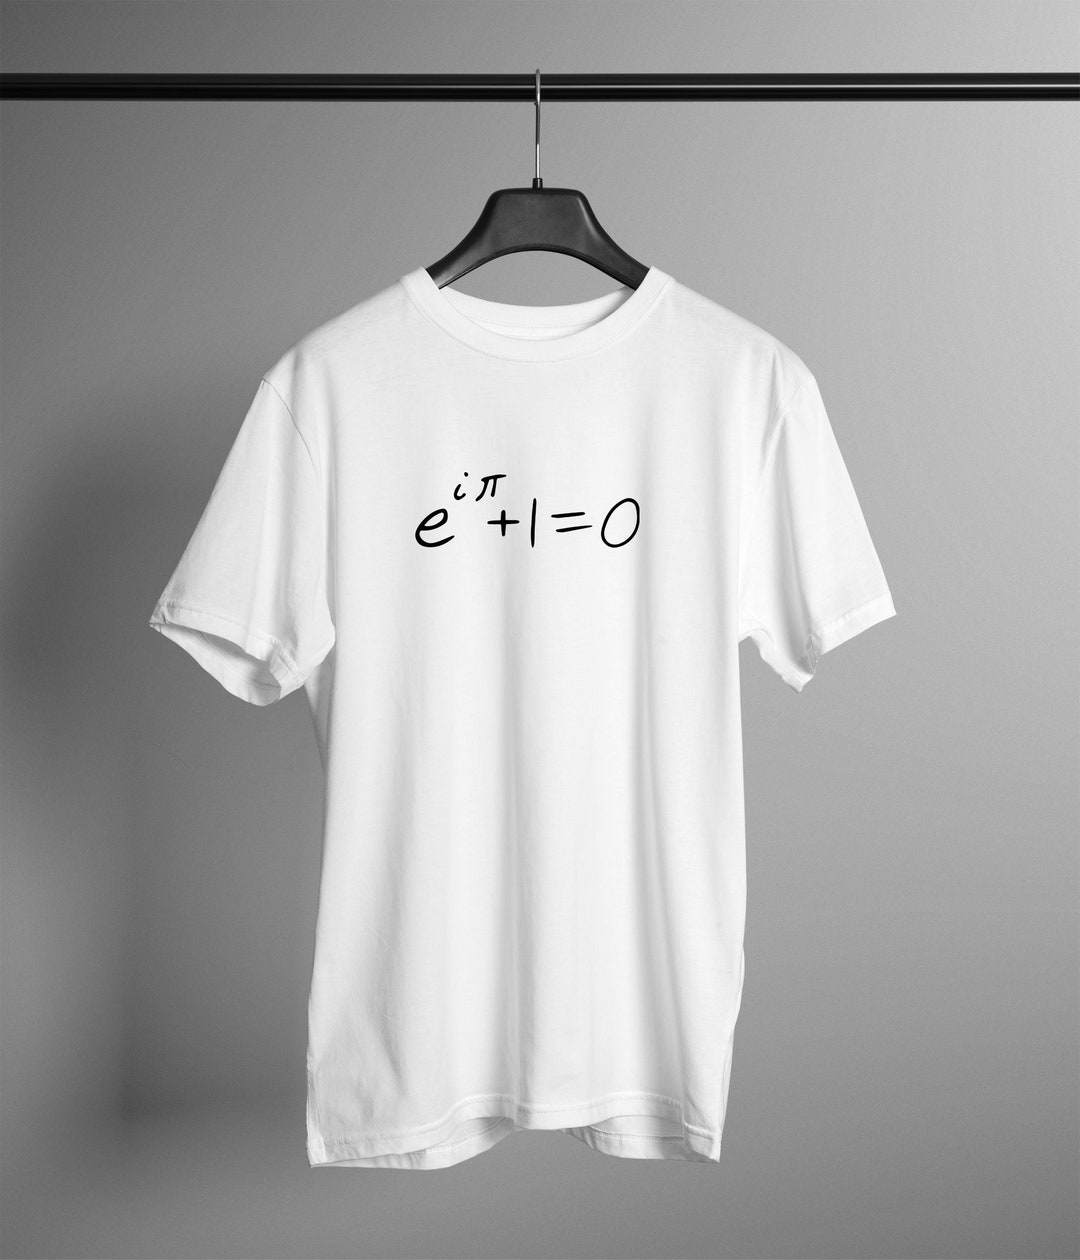 Euler's Euler Identity Maths & Science Equation T-shirt - Etsy